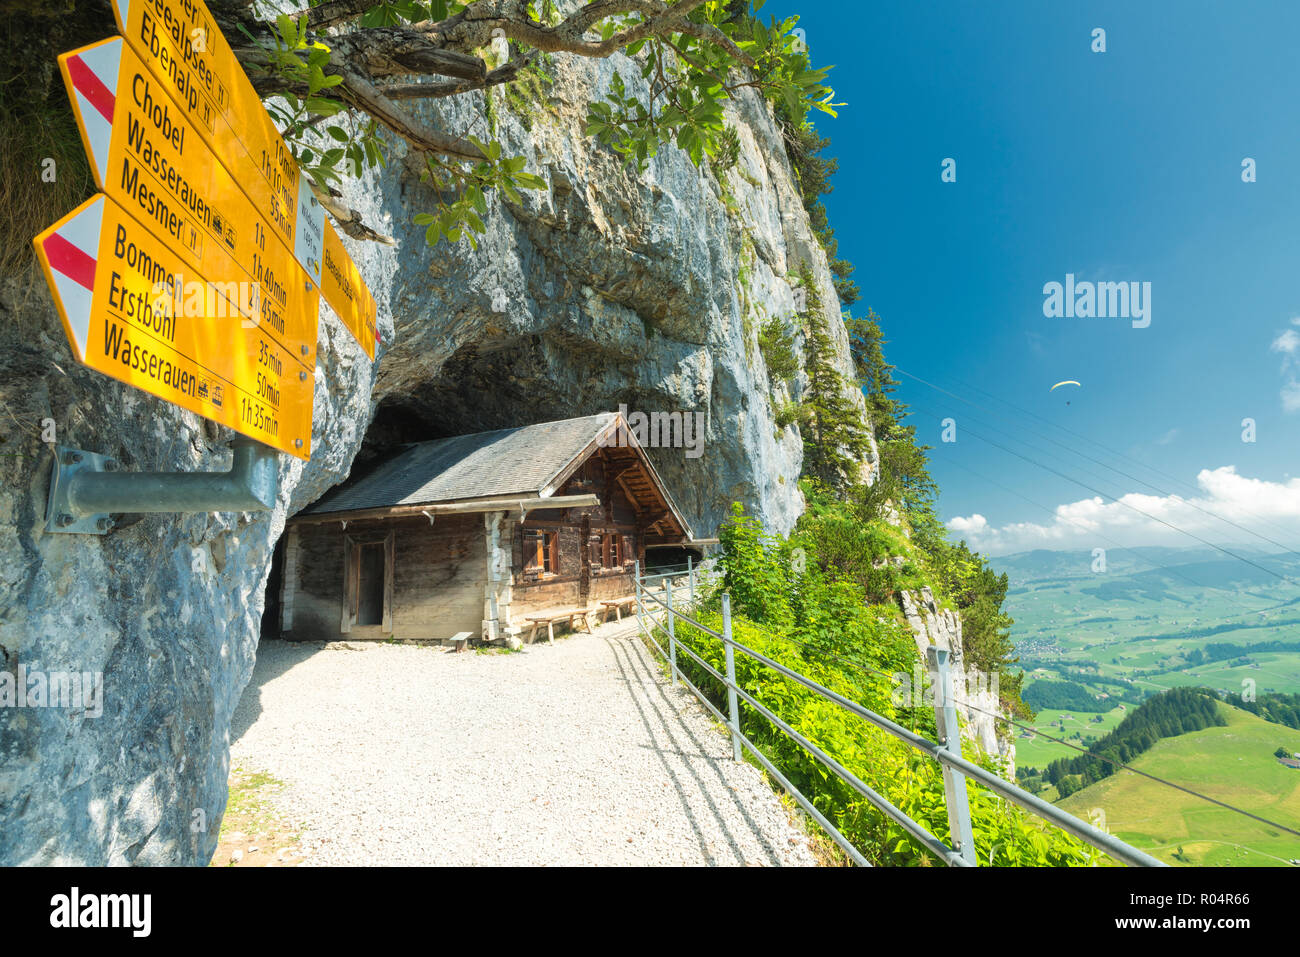 Signpost of hiking trails, Wildkirchli, Ebenalp, Appenzell Innerrhoden, Switzerland, Europe Stock Photo